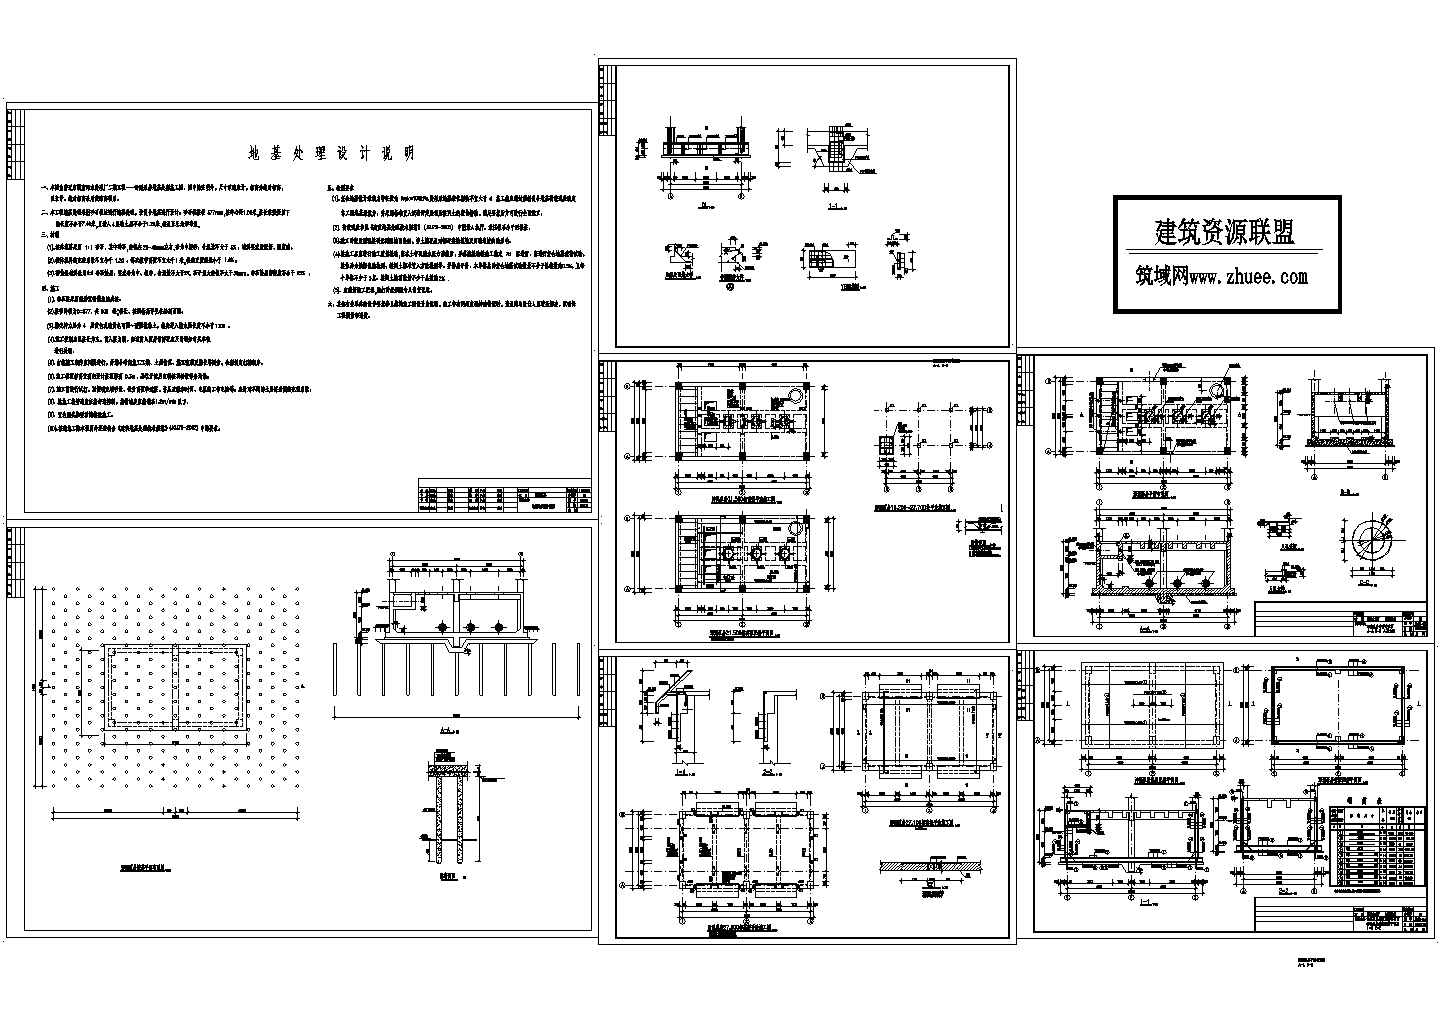 A2O工艺污水处理厂设计图